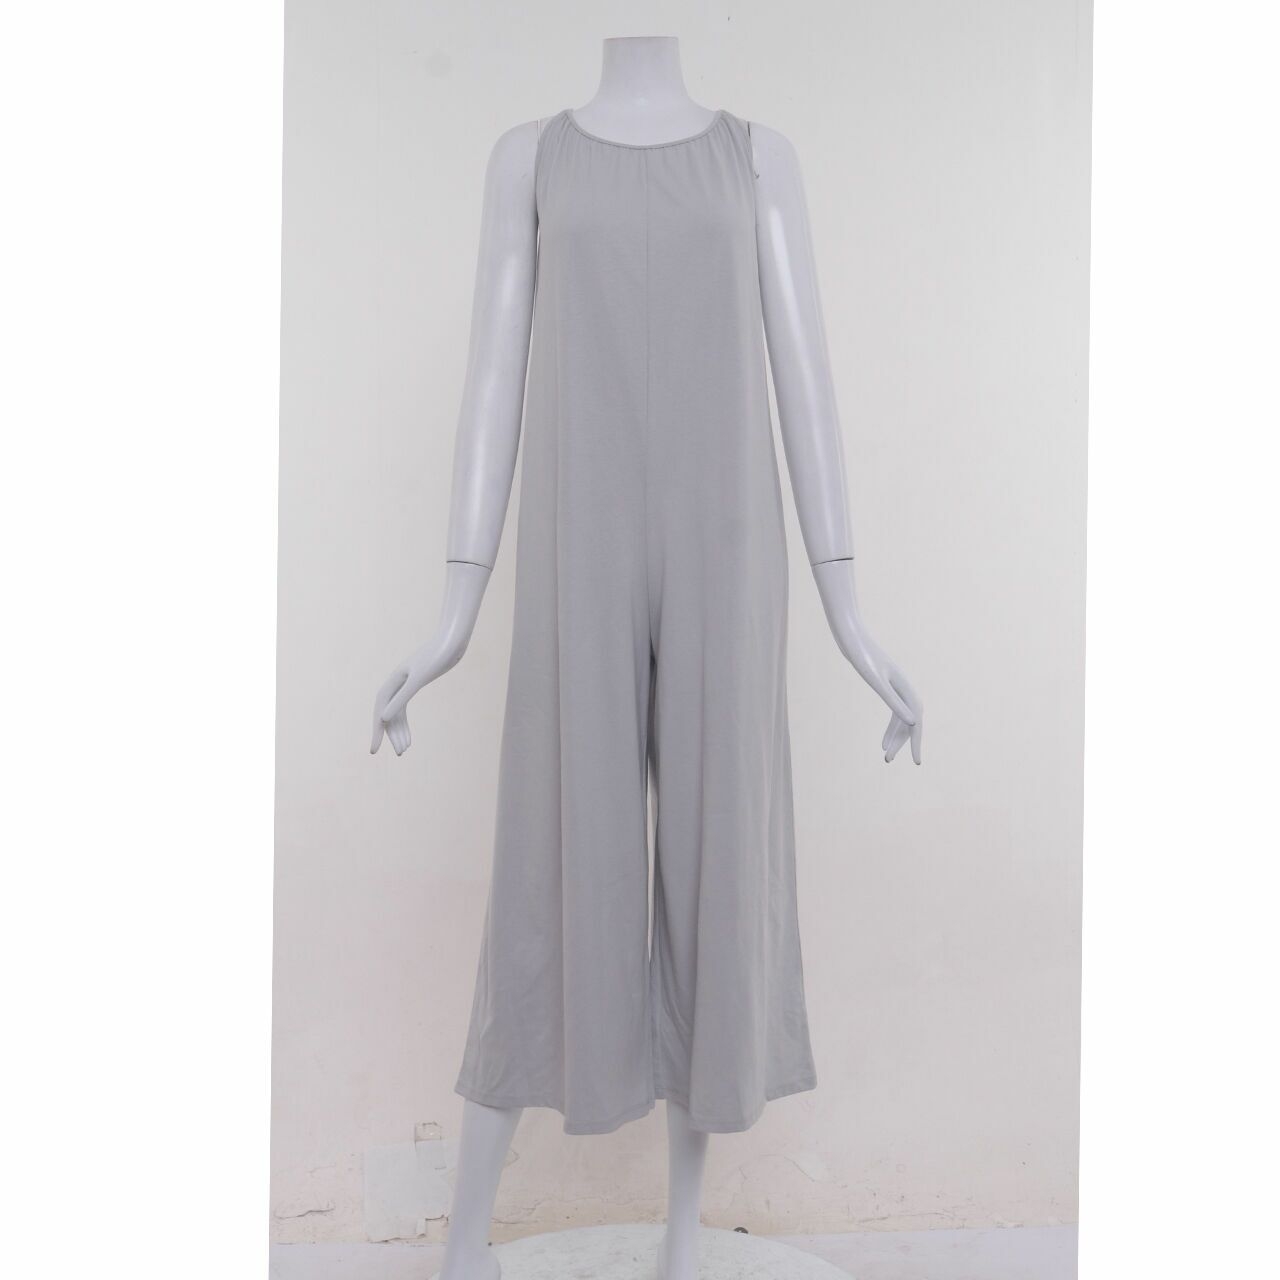 Zara Light Grey Jumpsuit